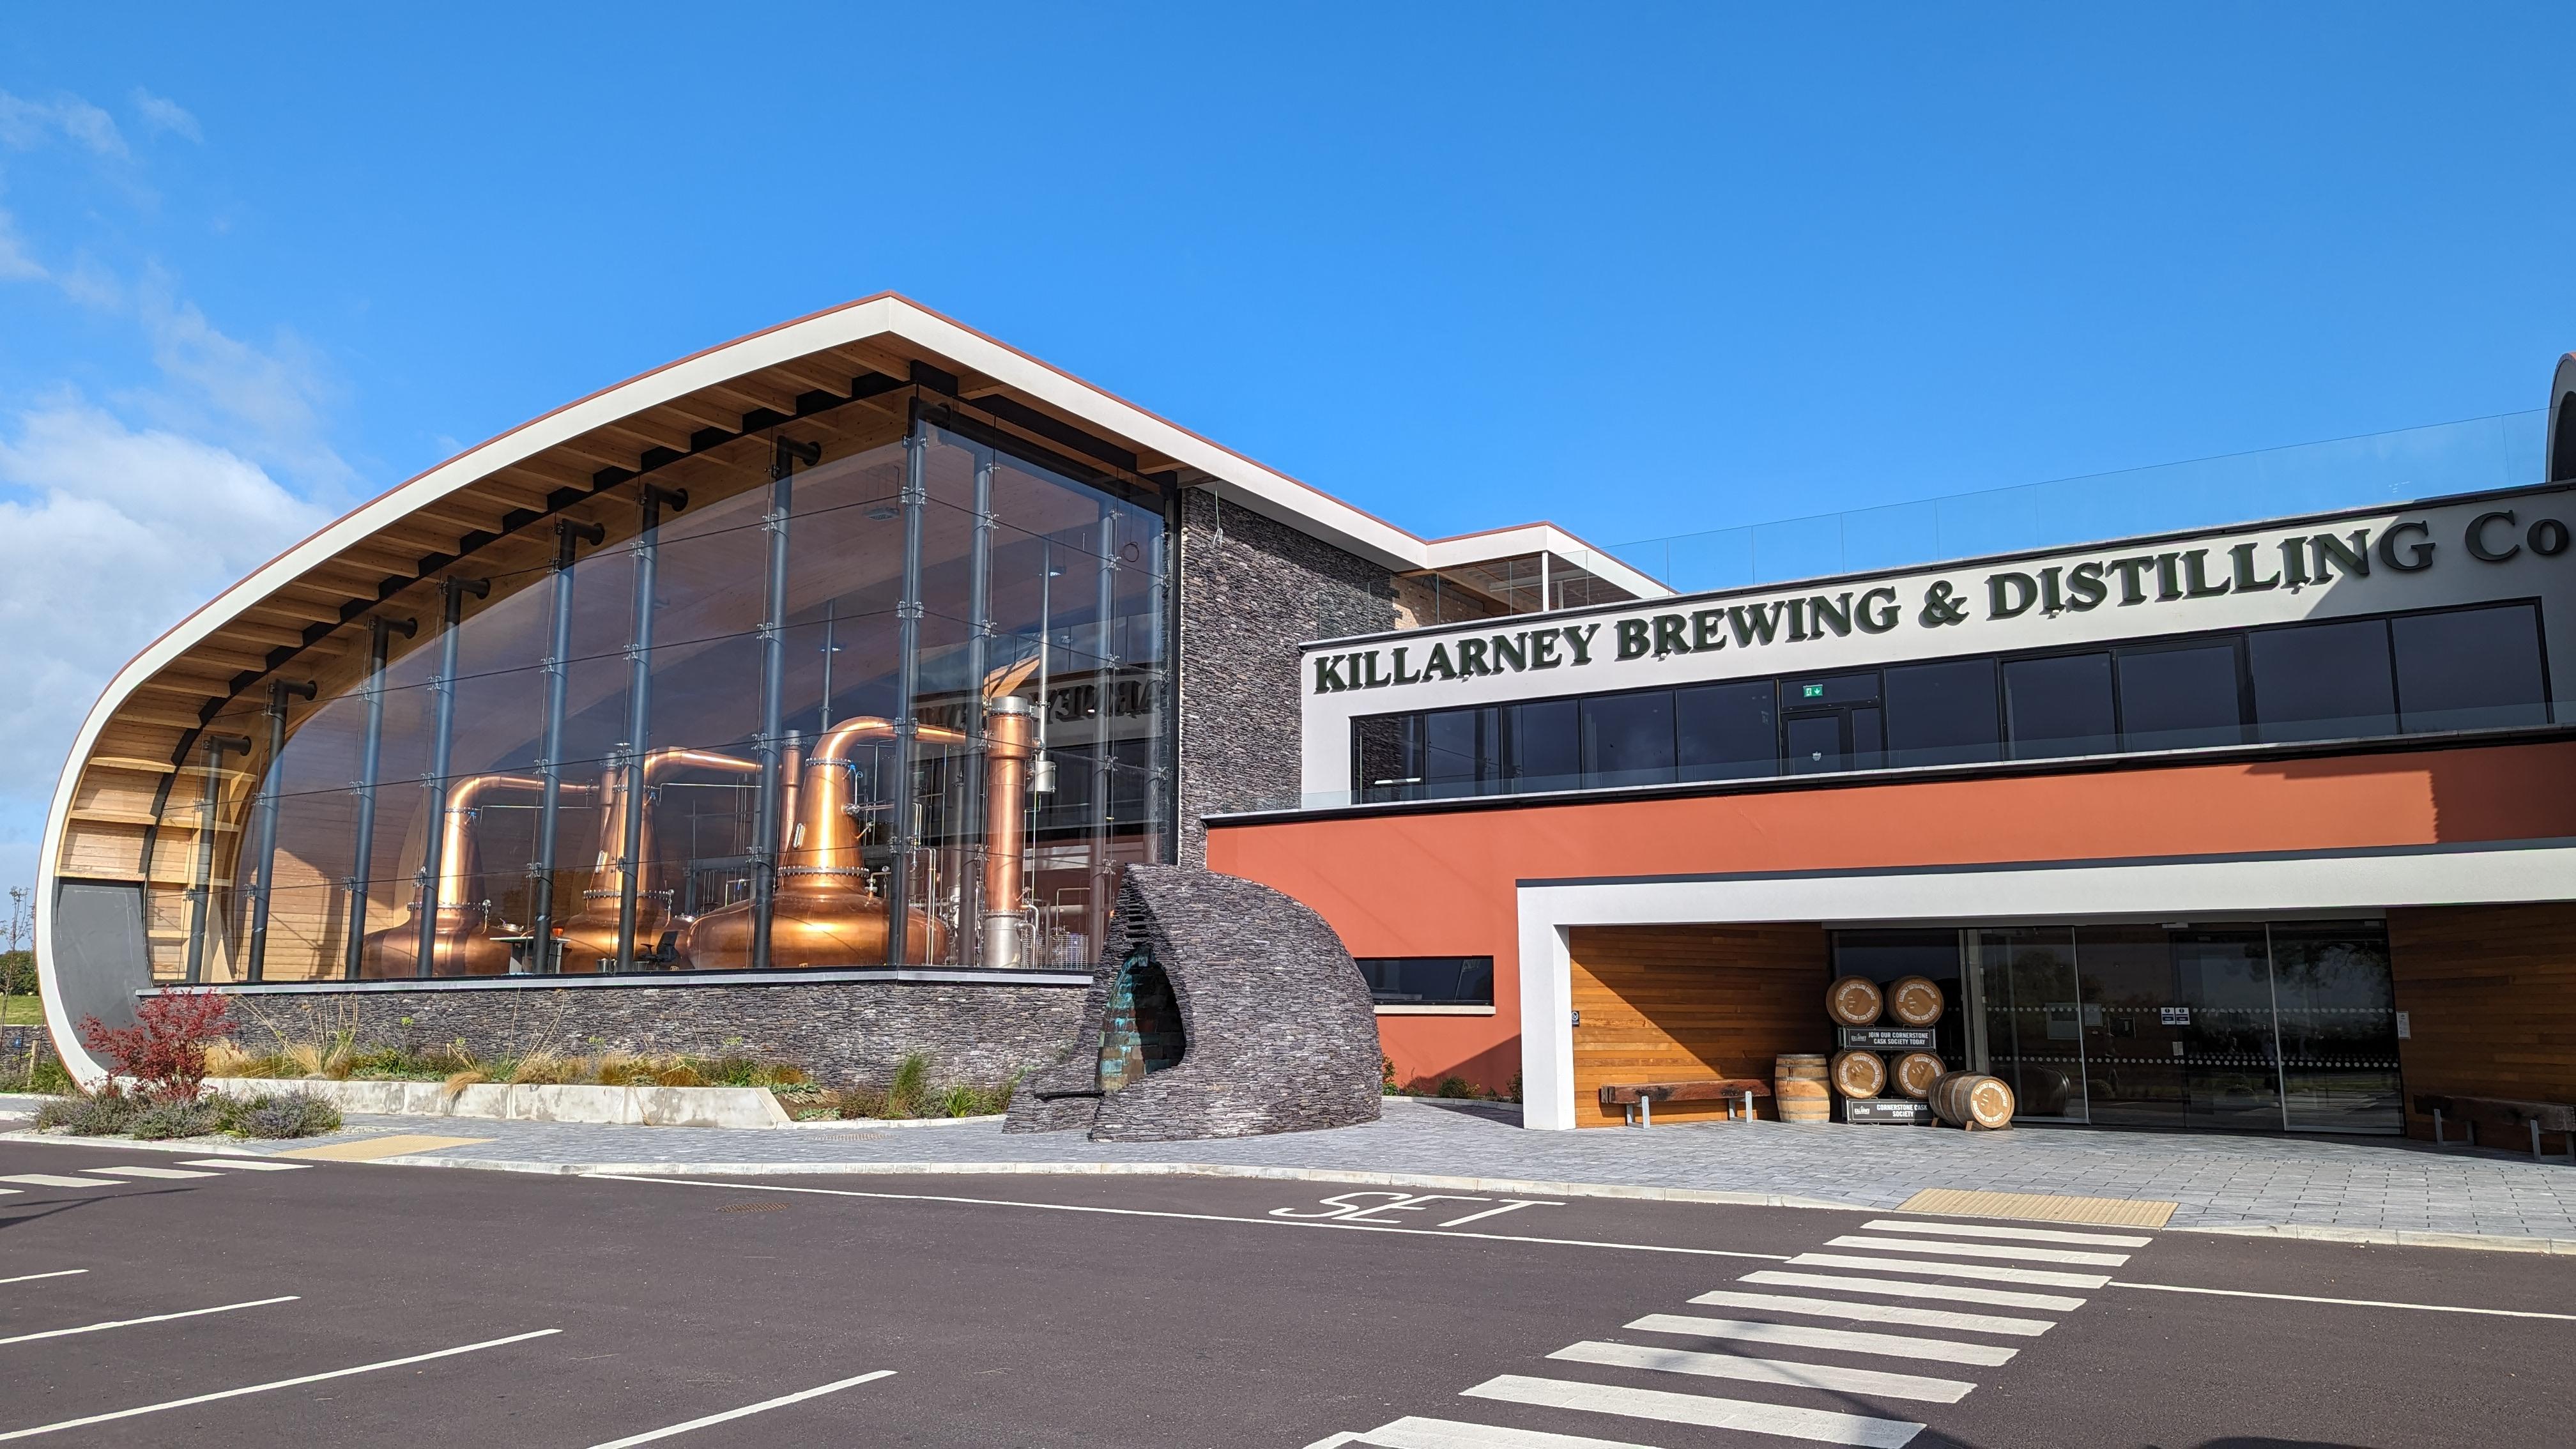 Killarney Brewing & Distilling Co